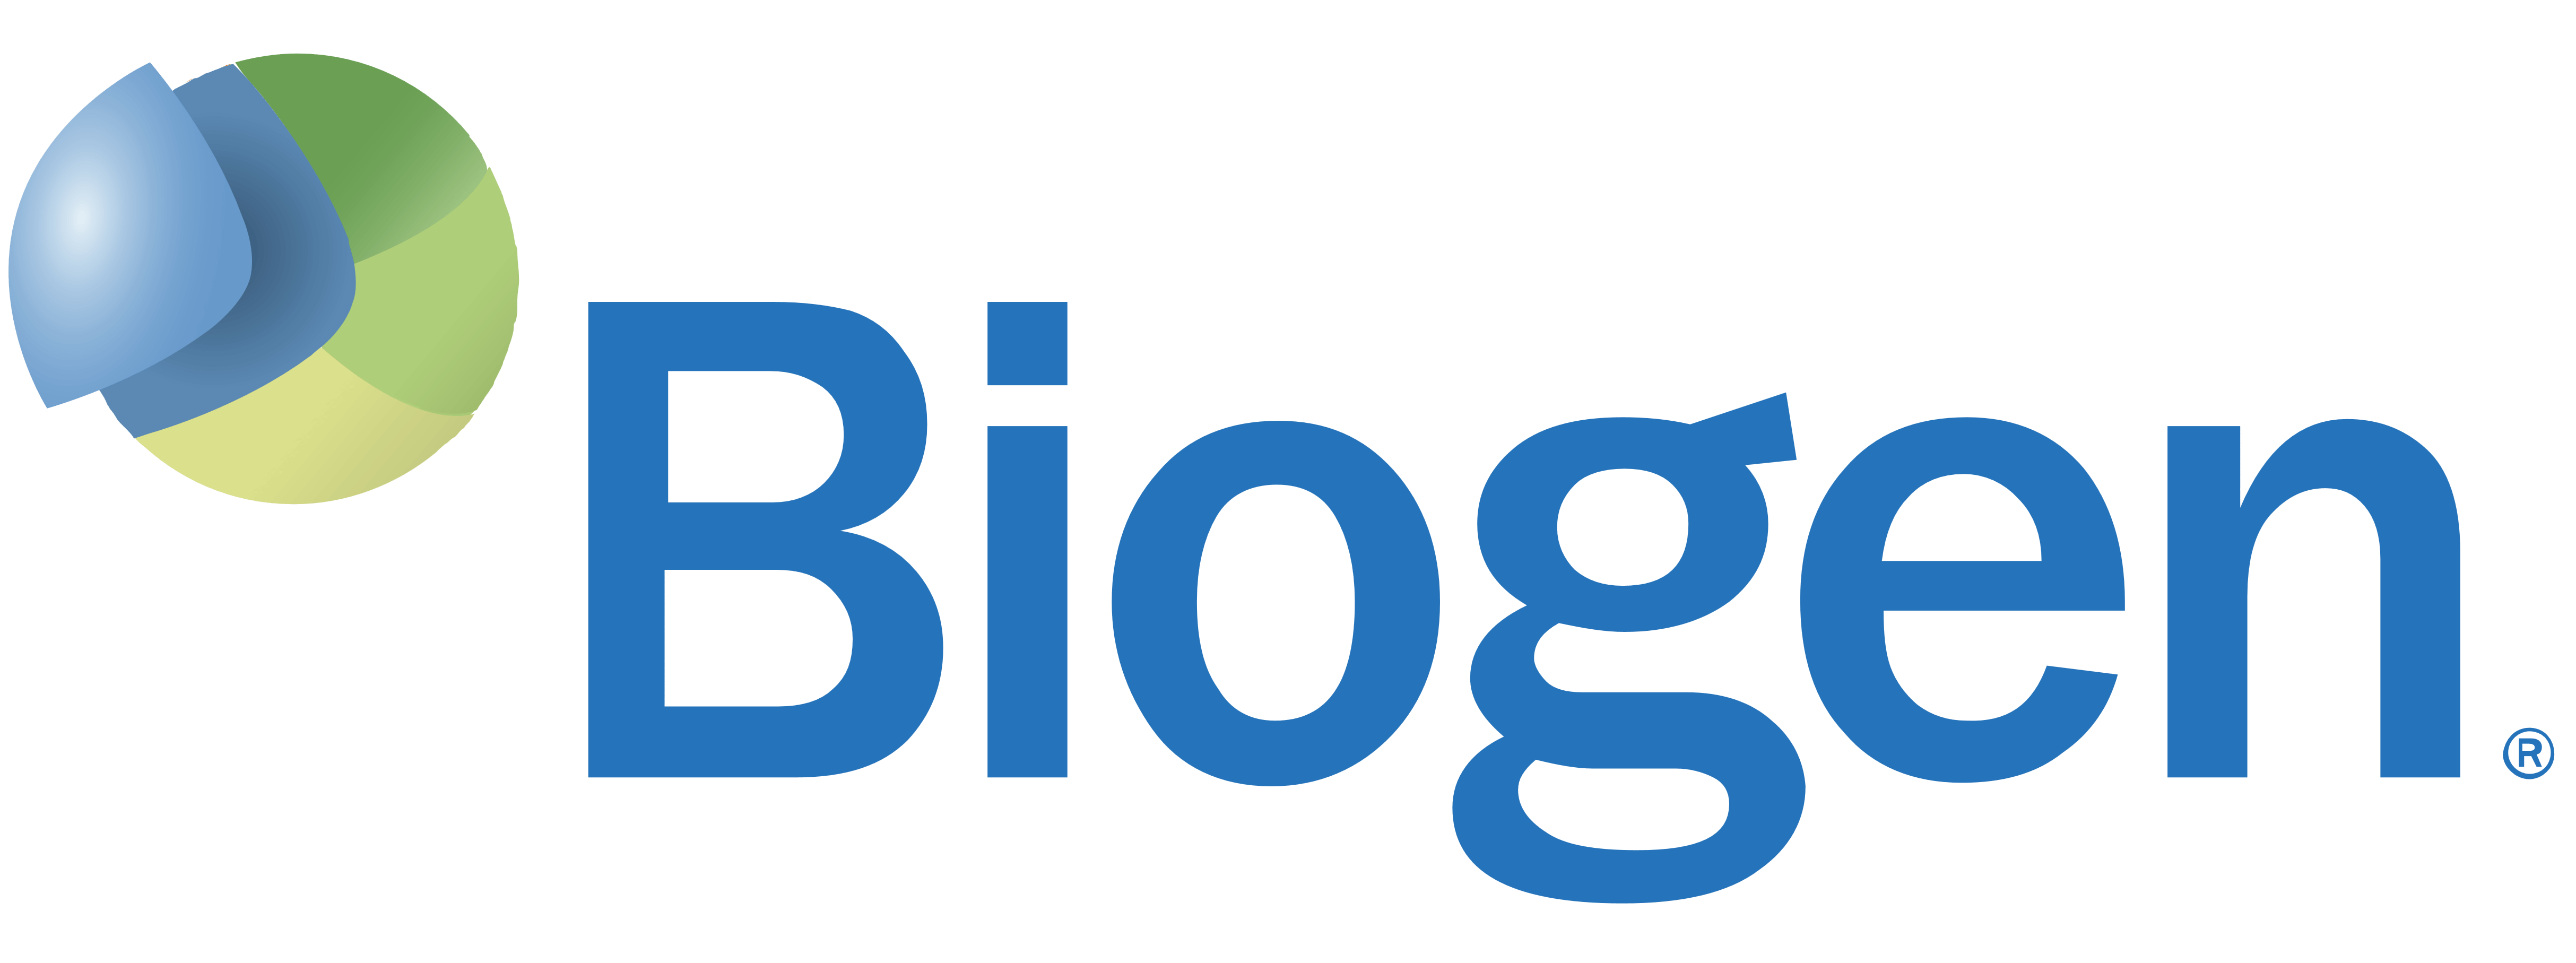 Biogen logo, logotype